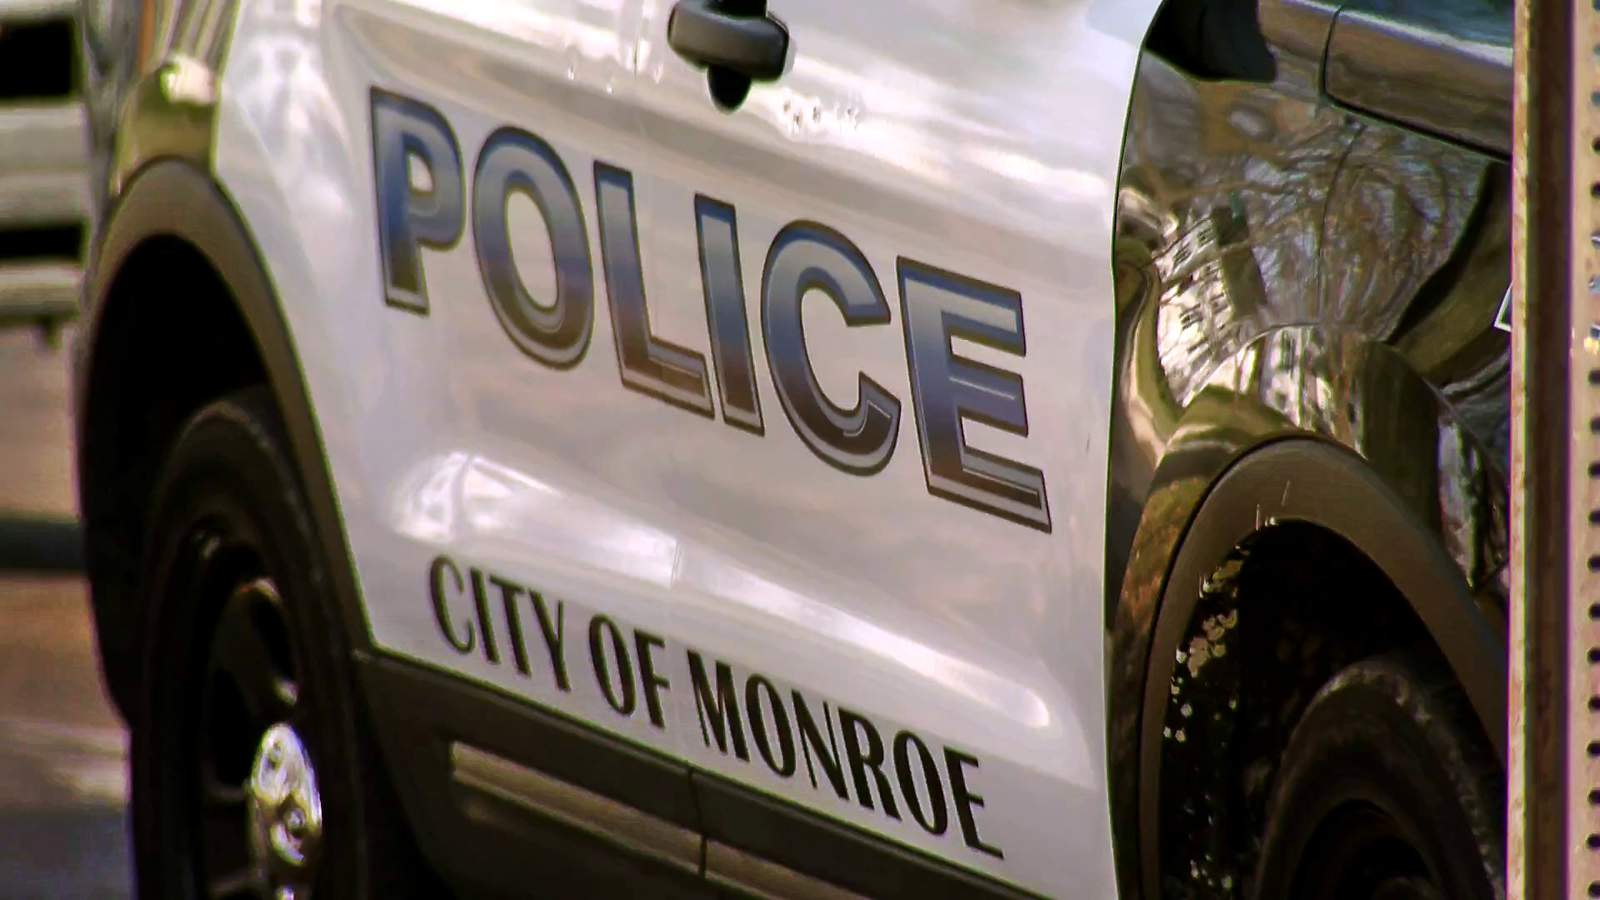 Pedestrian dies after being hit by vehicle in Monroe